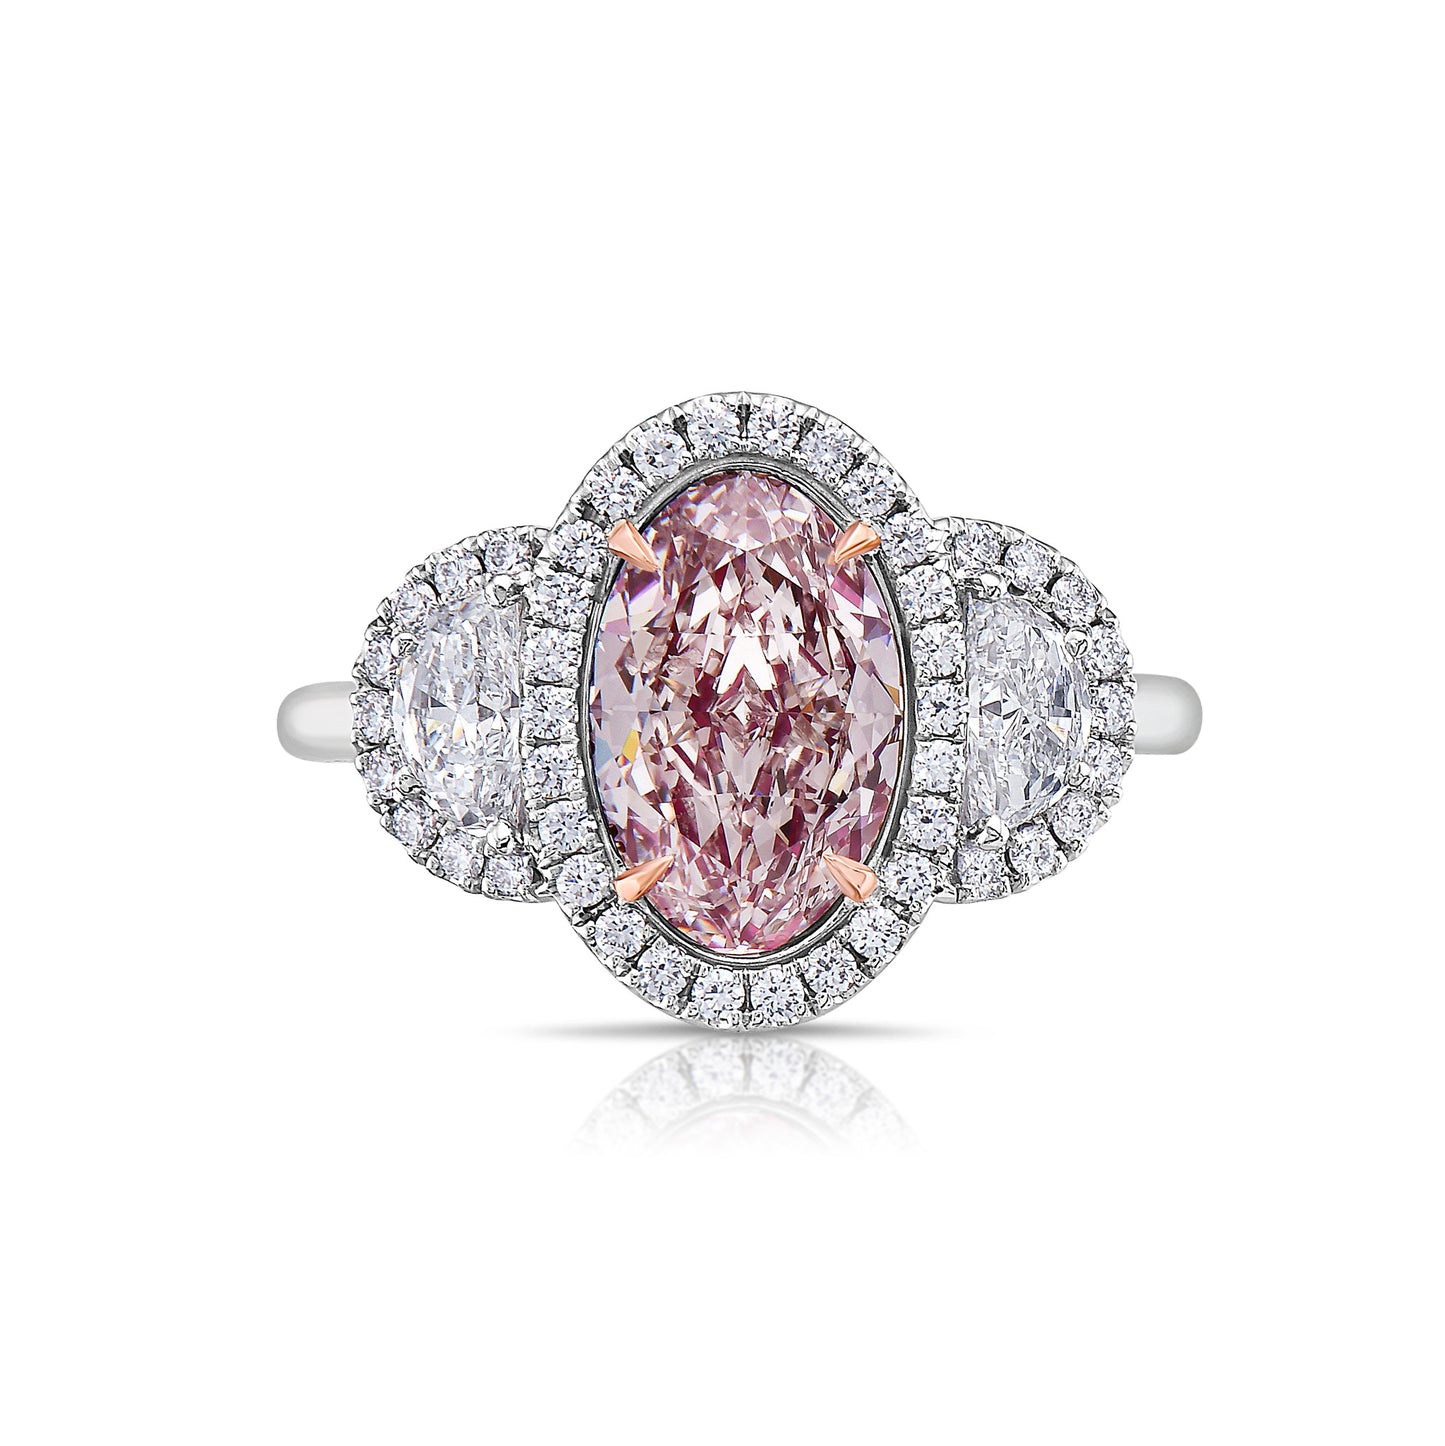 2 carat pink diamond oval. Light pink diamond oval. Natural pink diamond oval. Gia certified pink diamond. Light pink diamond oval ring. Pink diamond engagement ring.